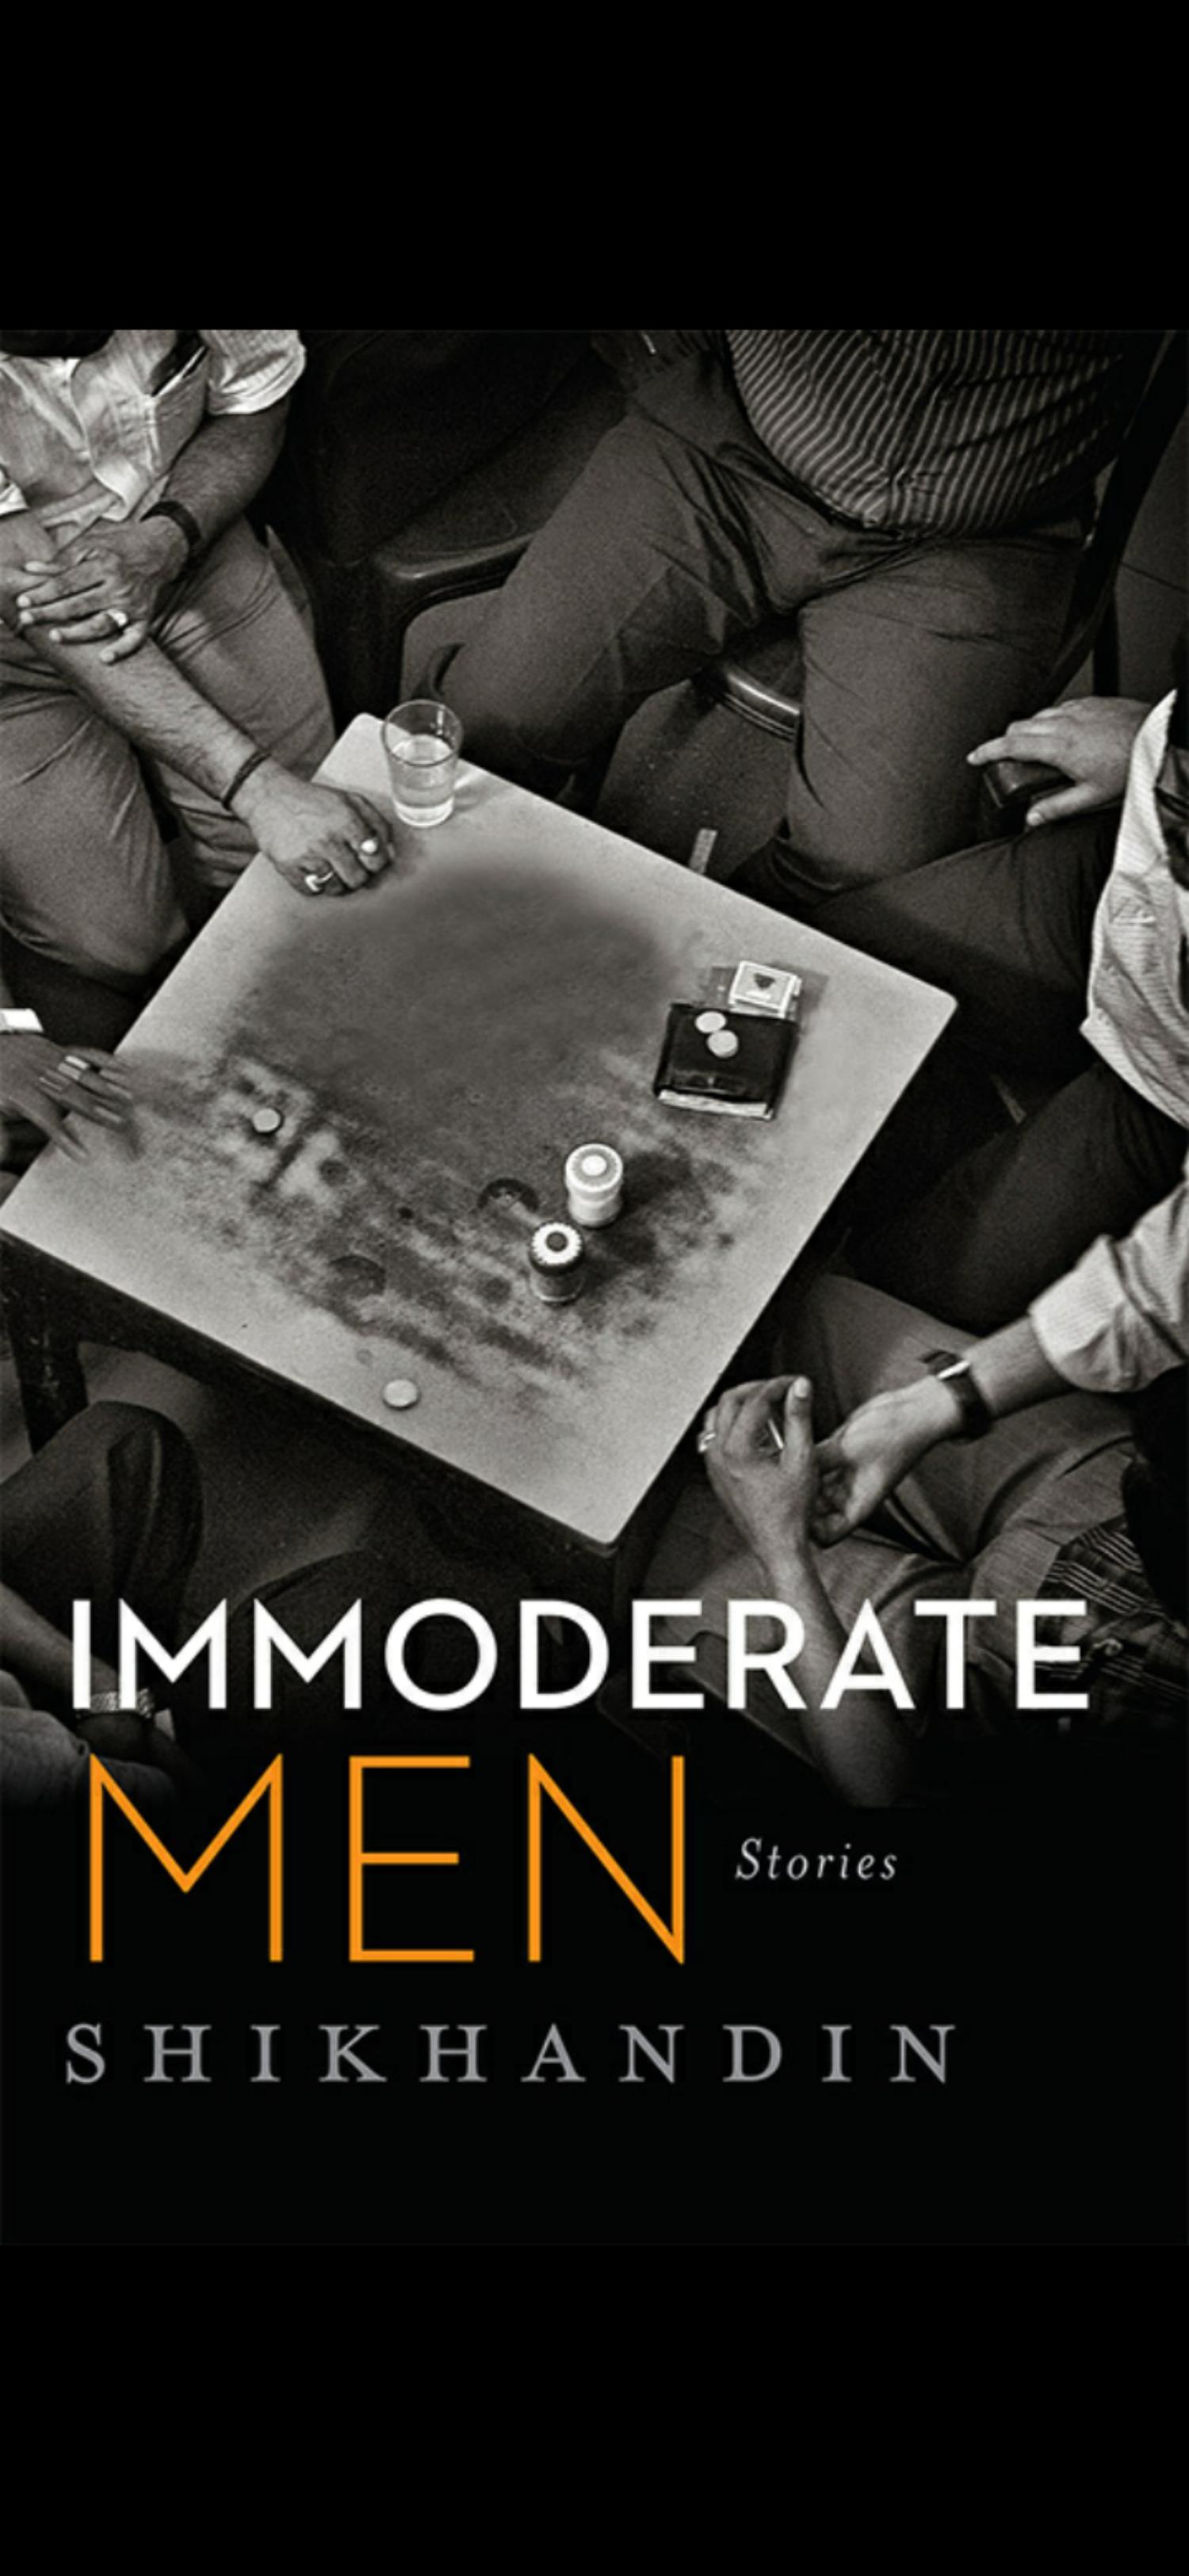 Immoderate Men by Shikhandin